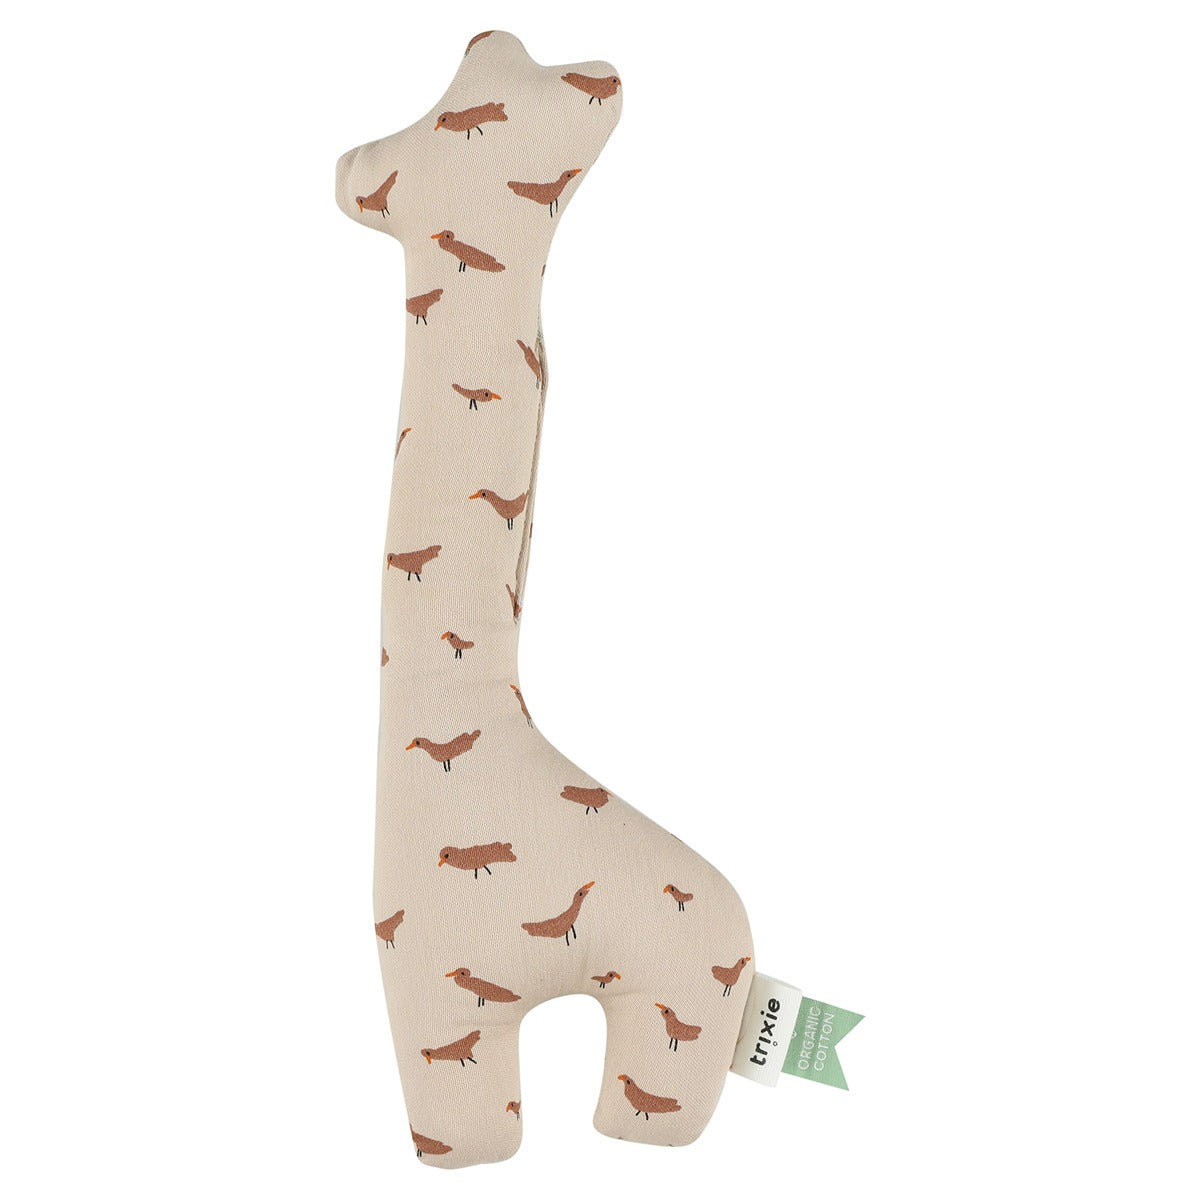 Soft beige giraffe-shaped rattle with brown bird design